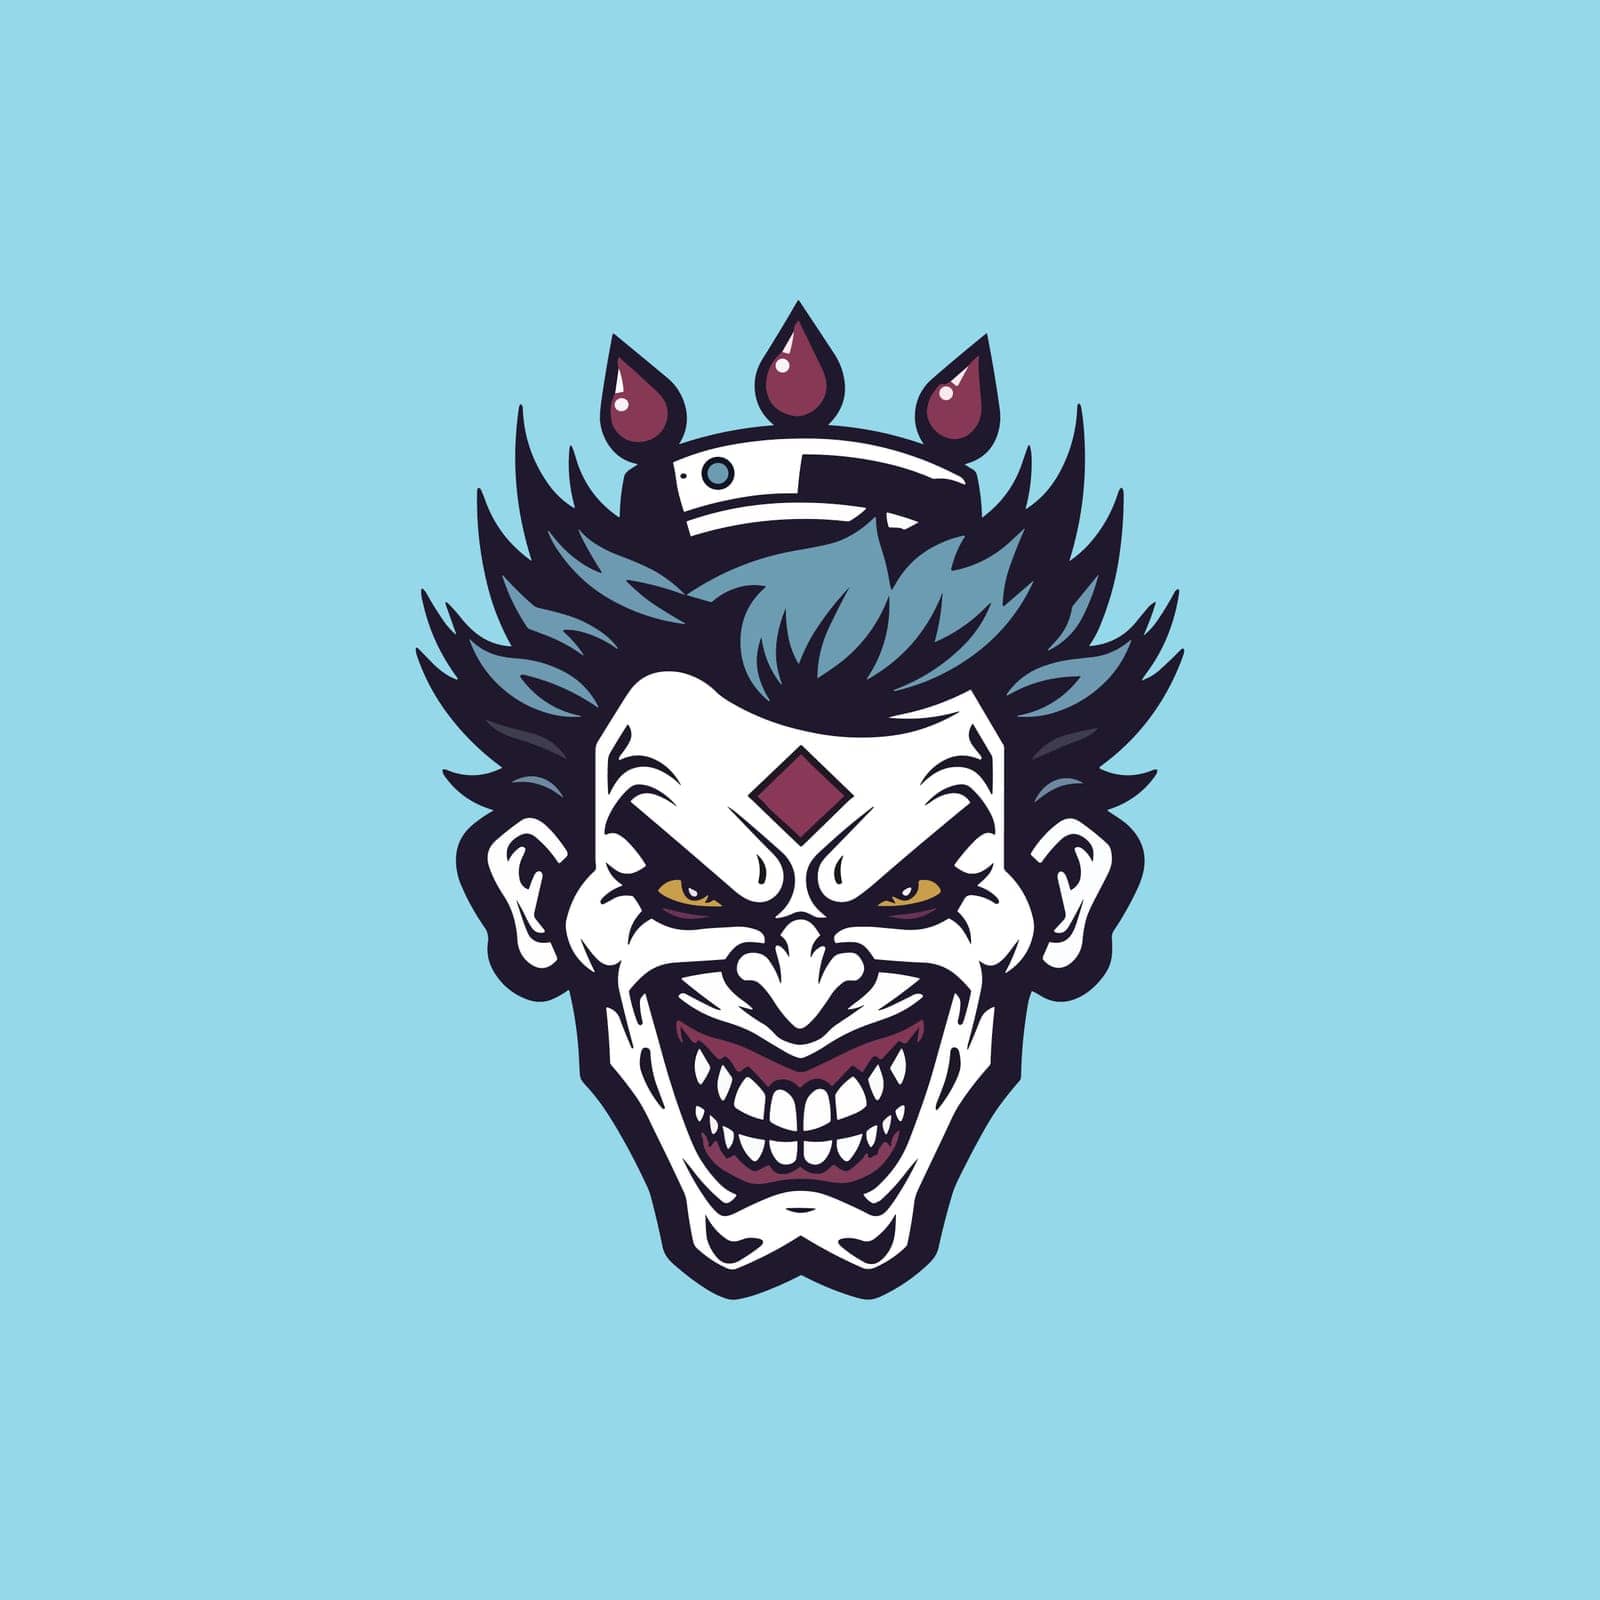 joker wear crown vector illustration